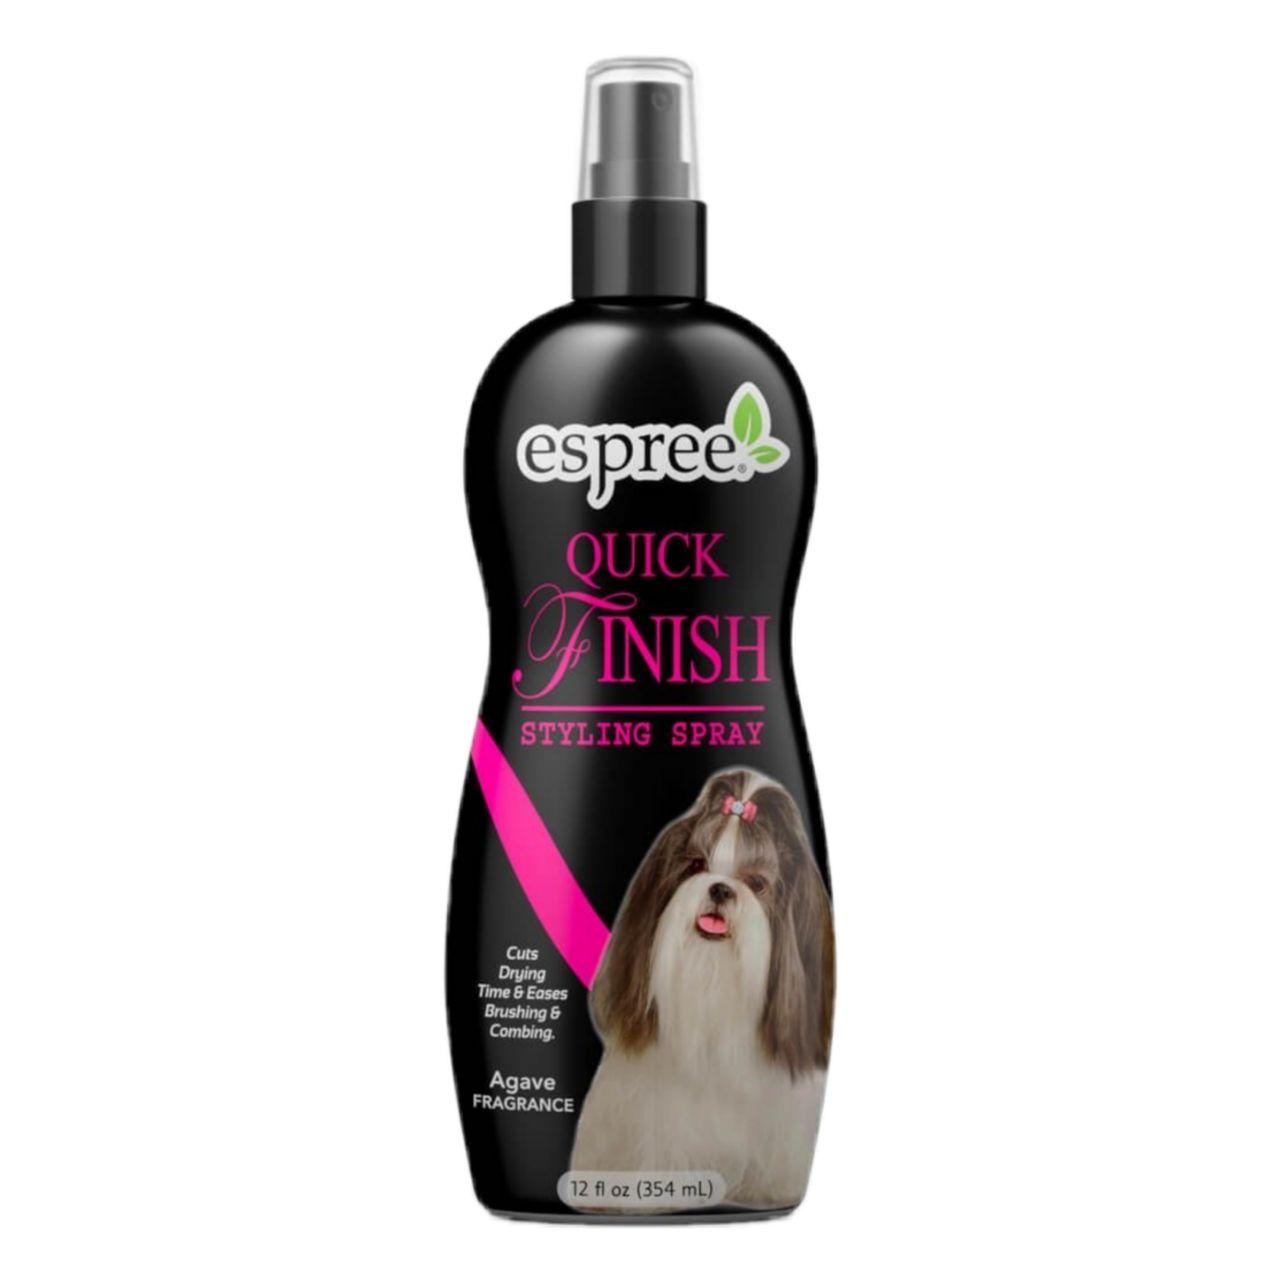 Espree Quick Finish Styling Spray – спрей для легкого расчесывания и укладки шерсти собак